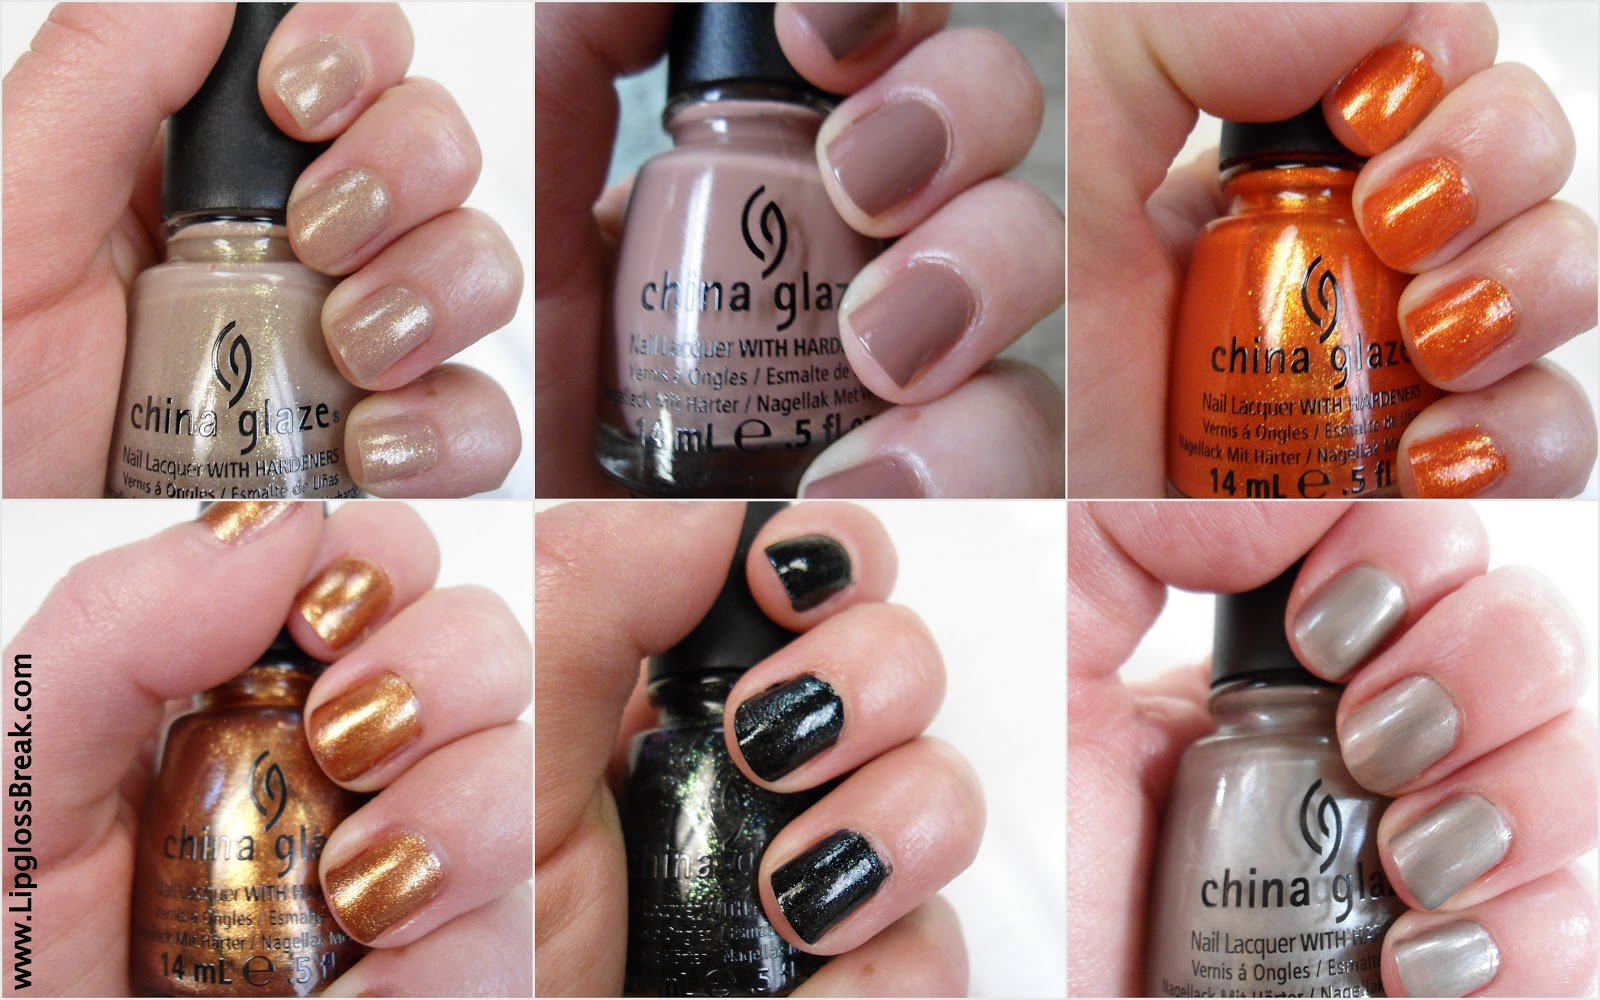 The Hunger Games China Glaze nail polish collection